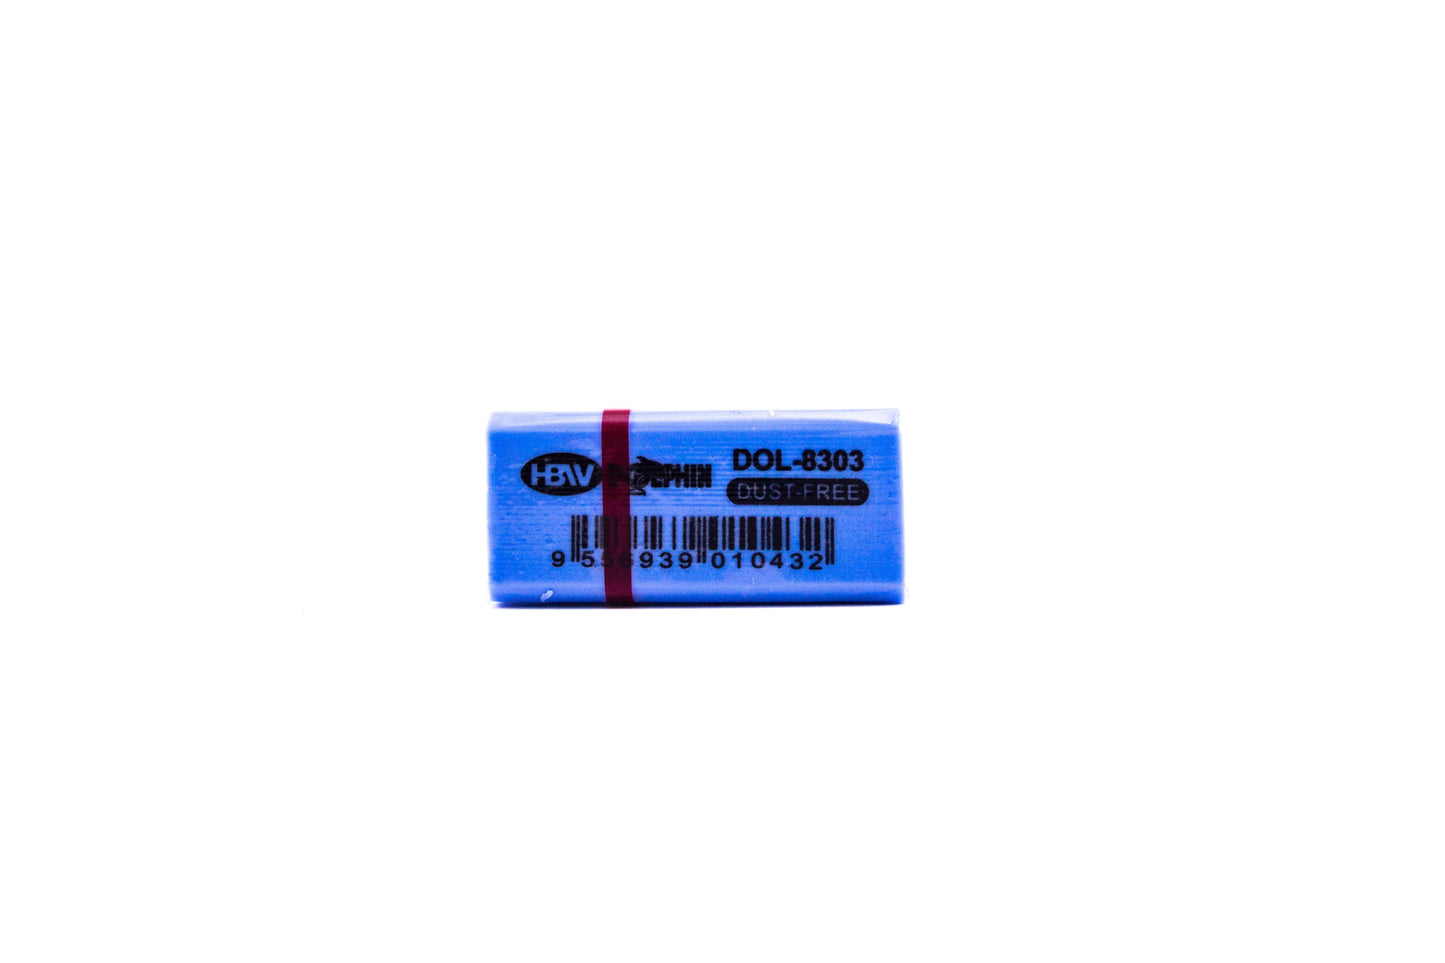 HBW Dolphin Dust-Free Eraser DOL-8303 (45pcs)